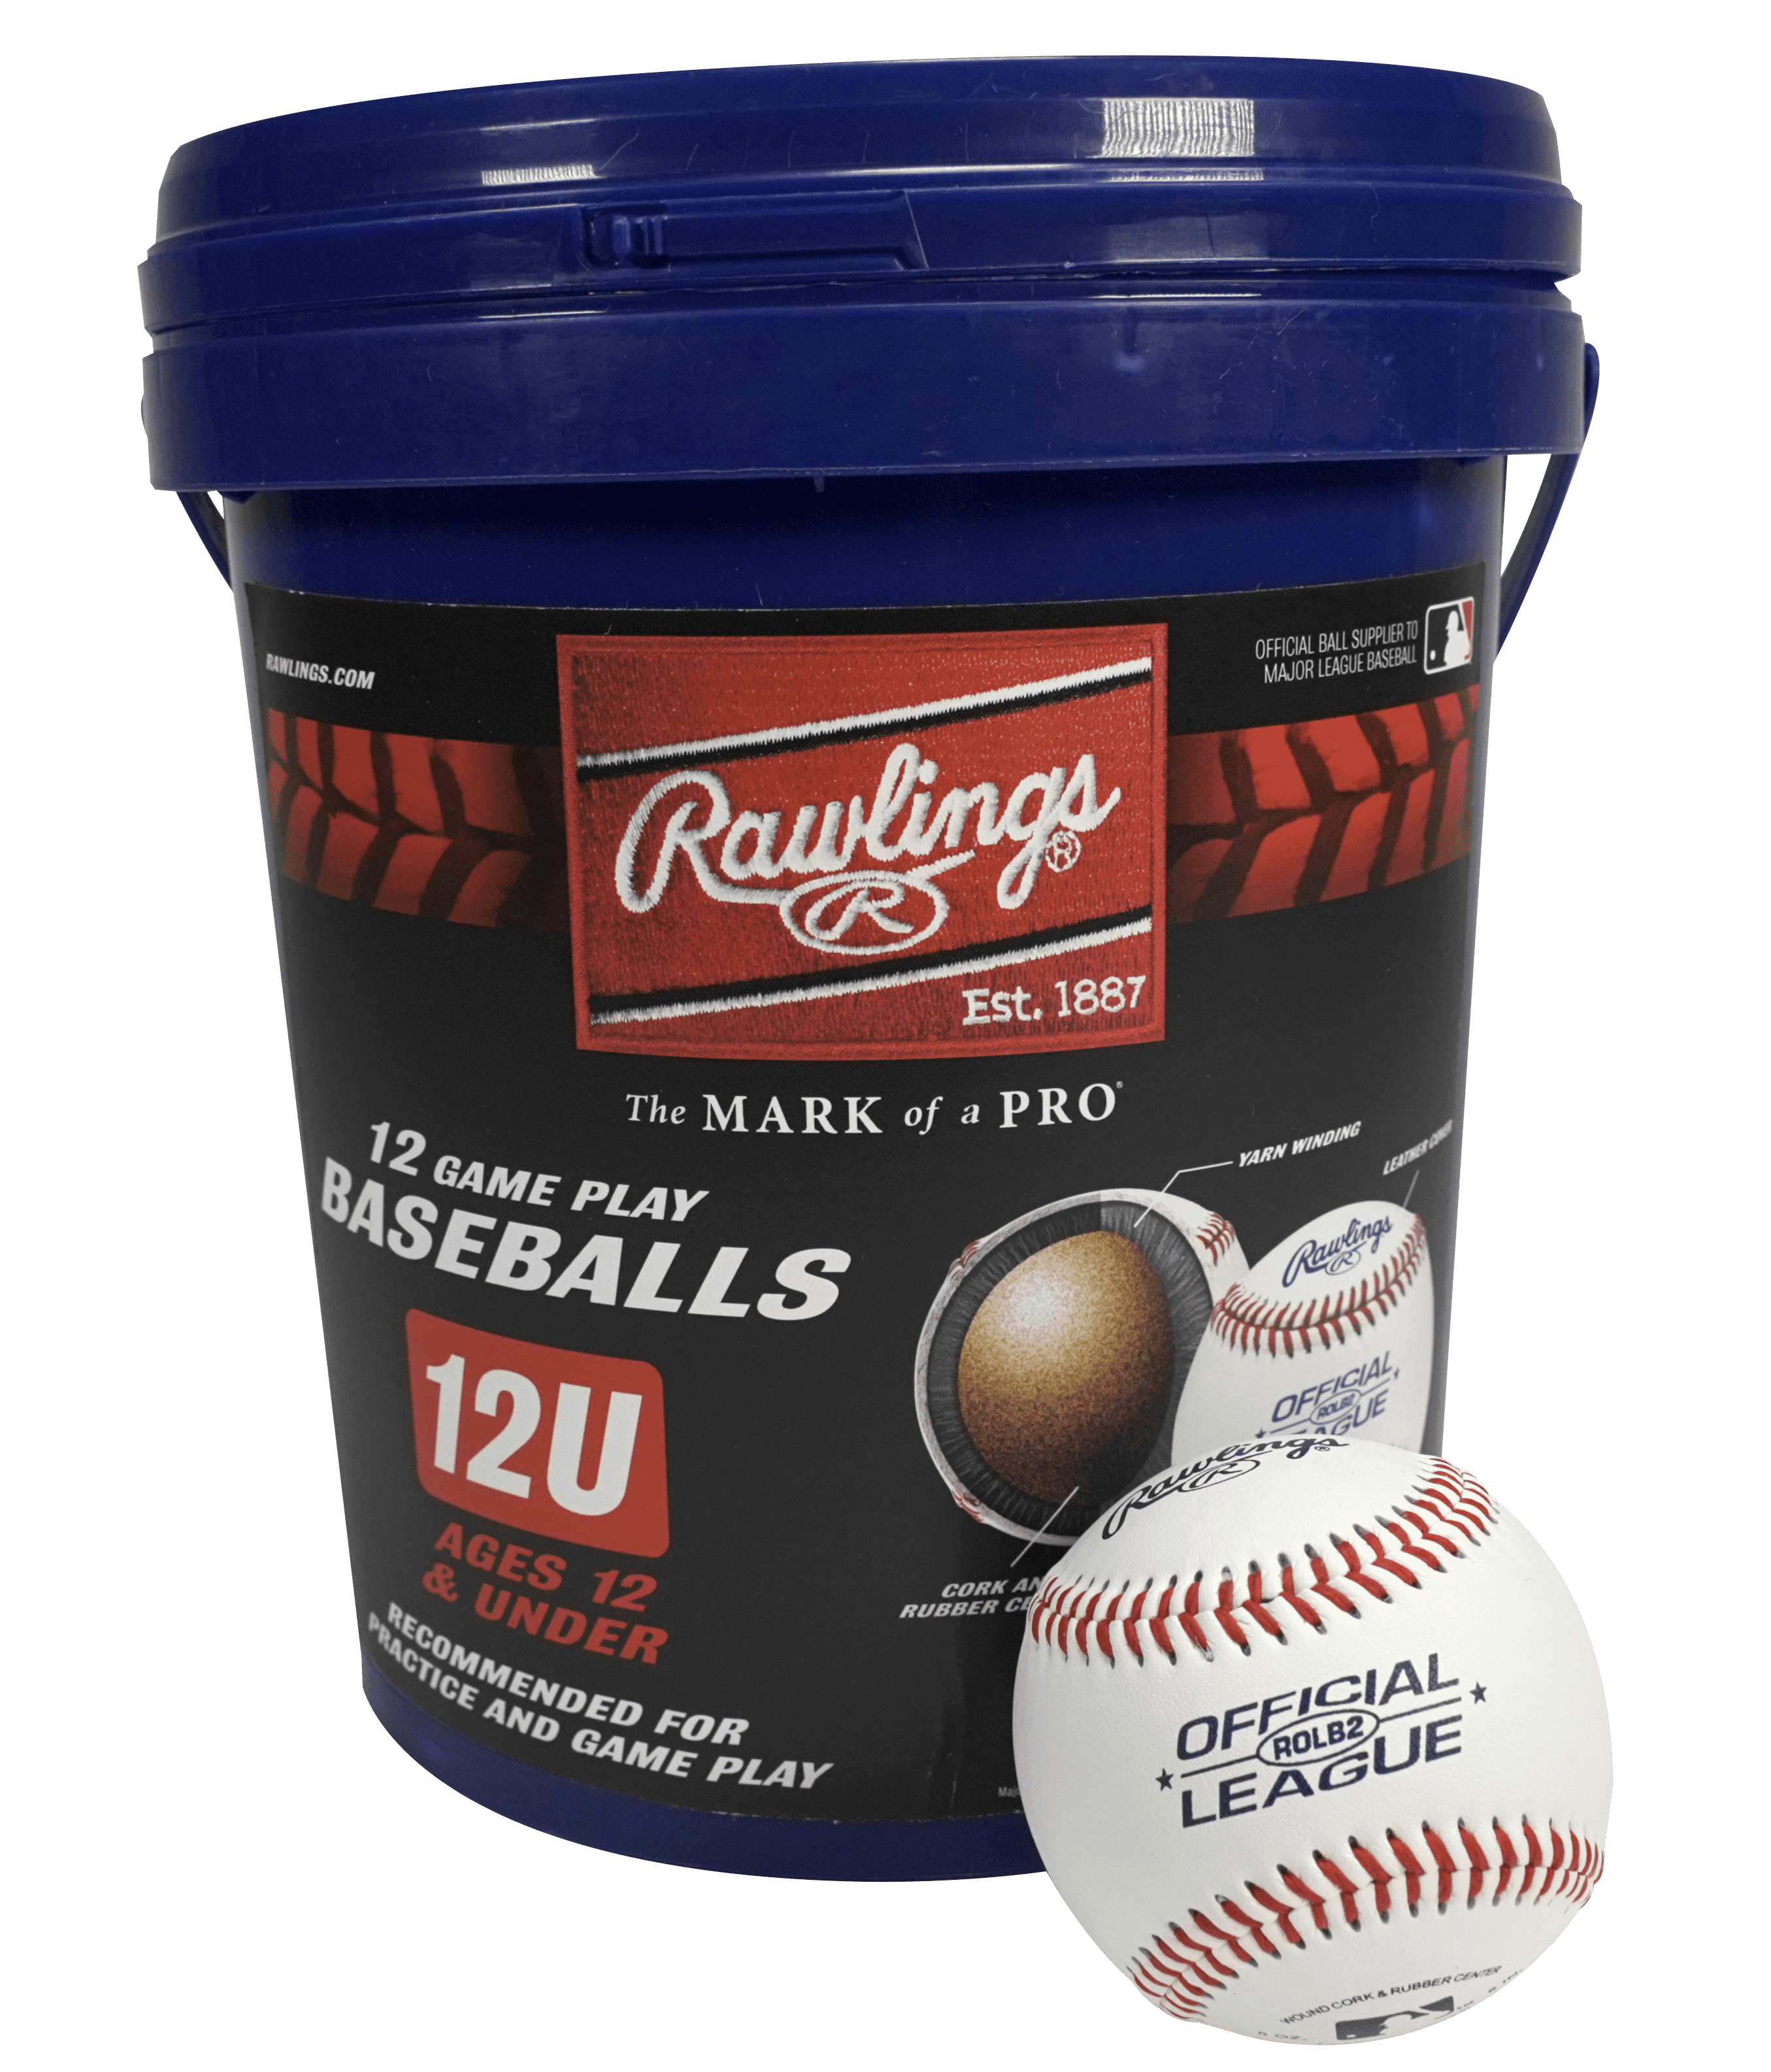 Rawlings Bucket Official League Youth Baseballs CROLB 10u for sale online 